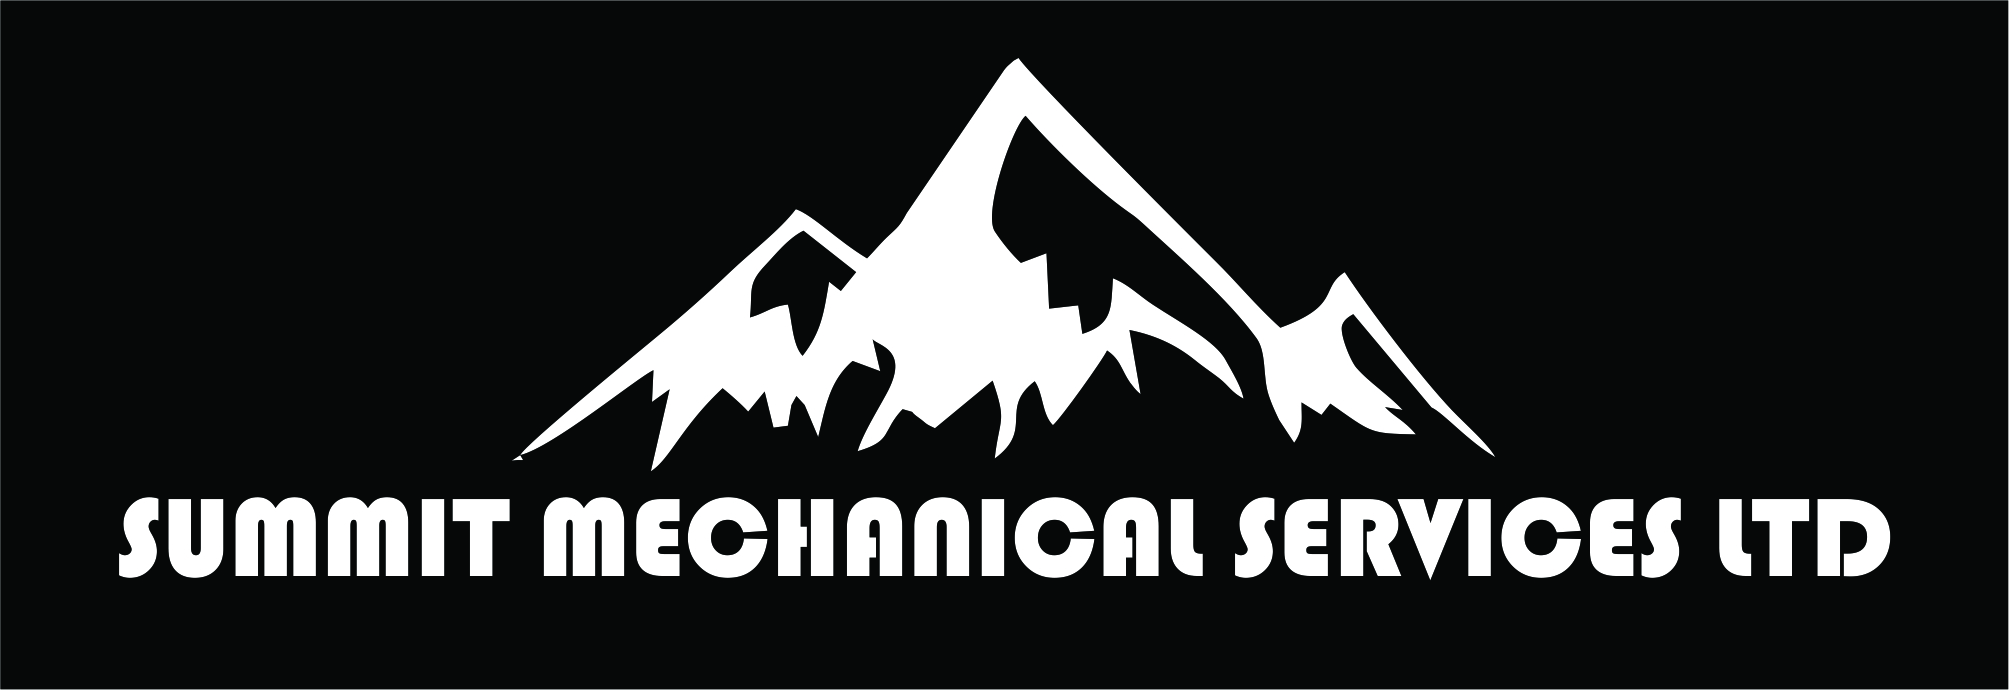 Summit Mechanical Services Ltd